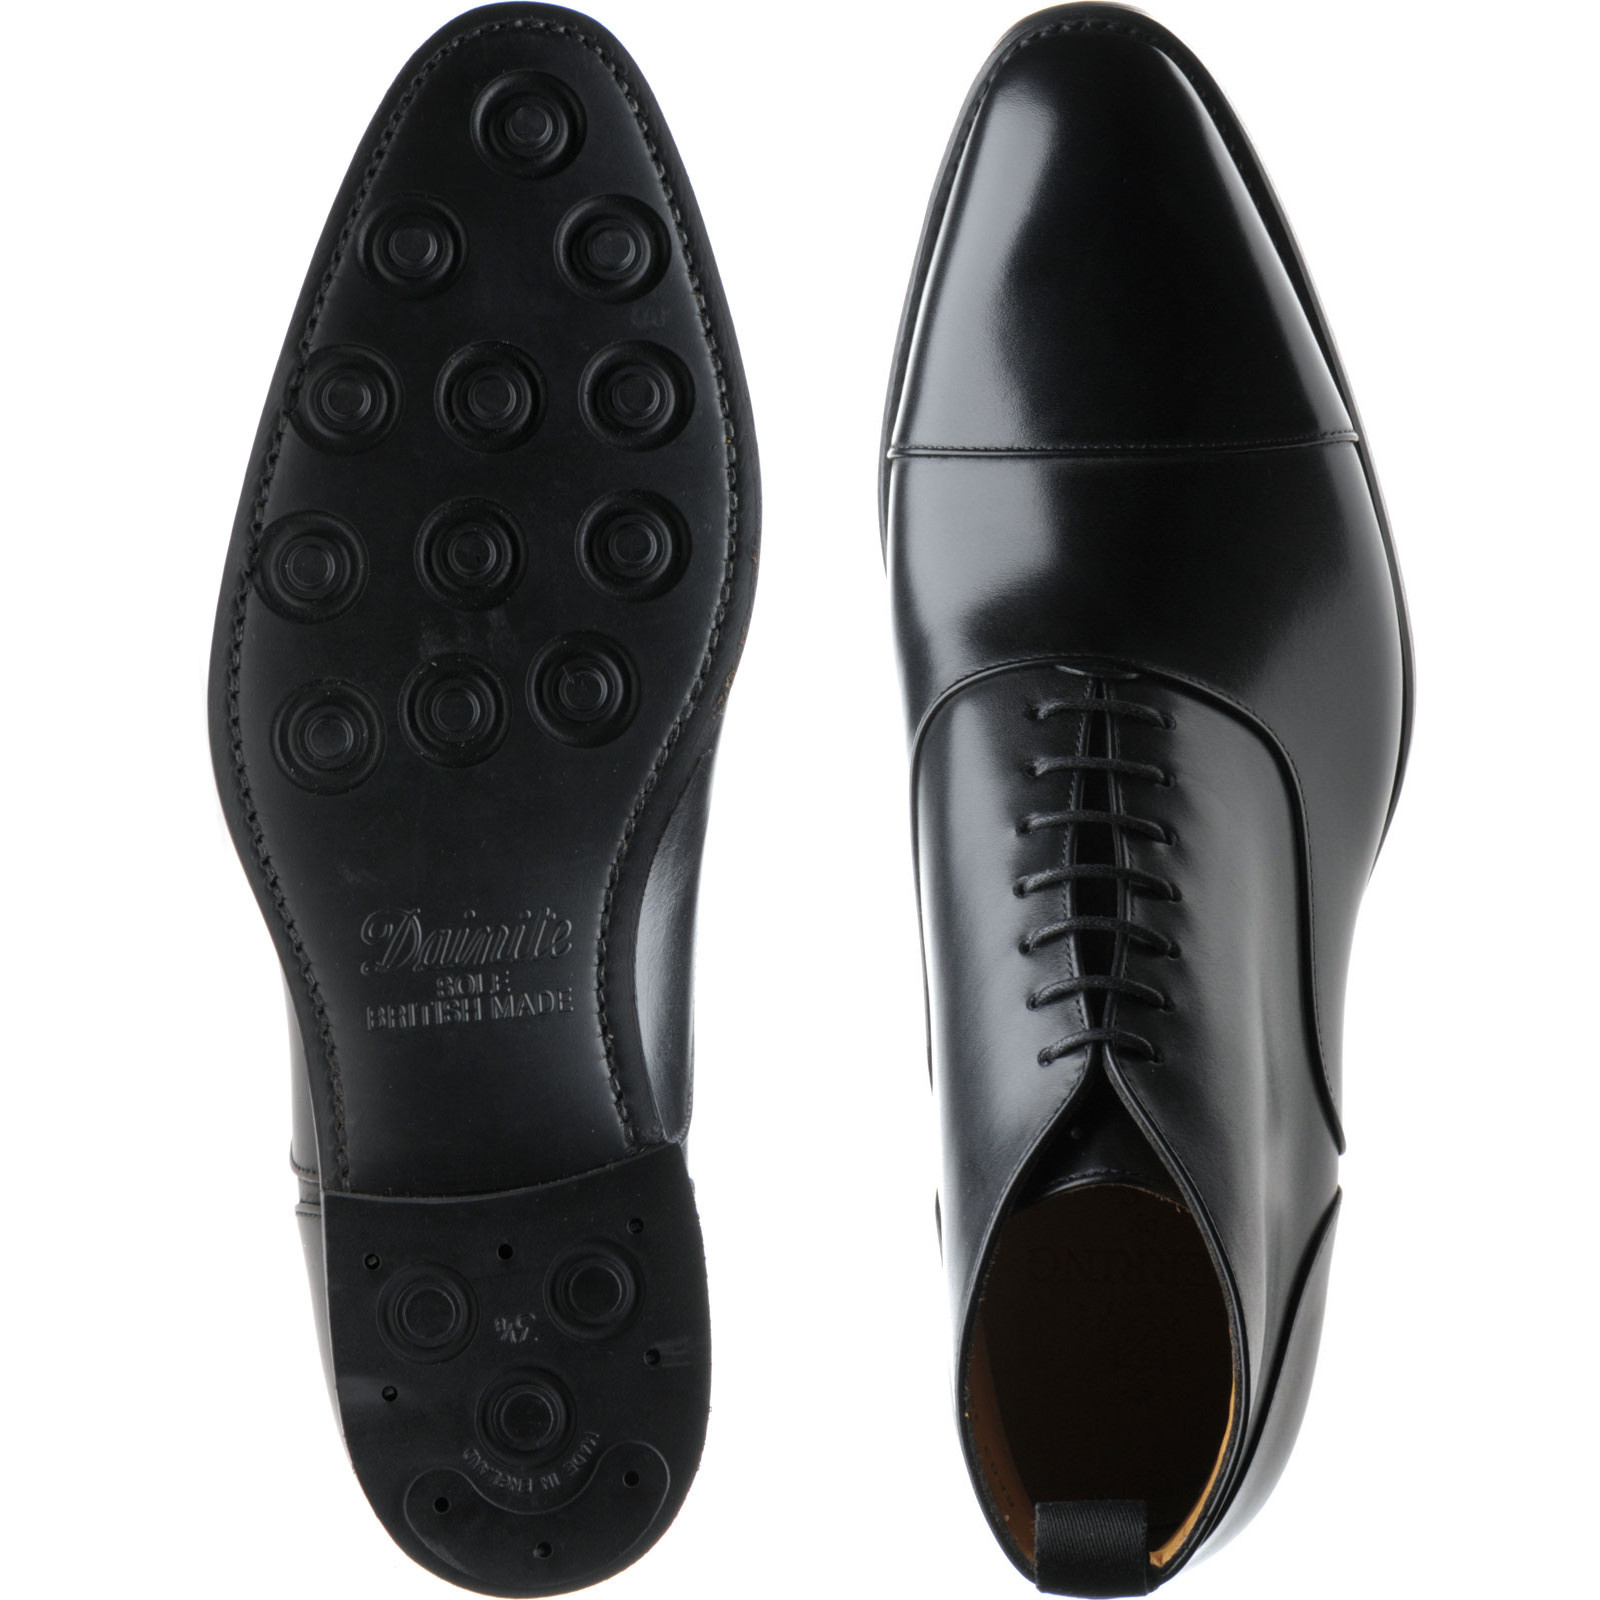 Herring shoes | Herring Classic | Flynn R in Black Calf at Herring Shoes